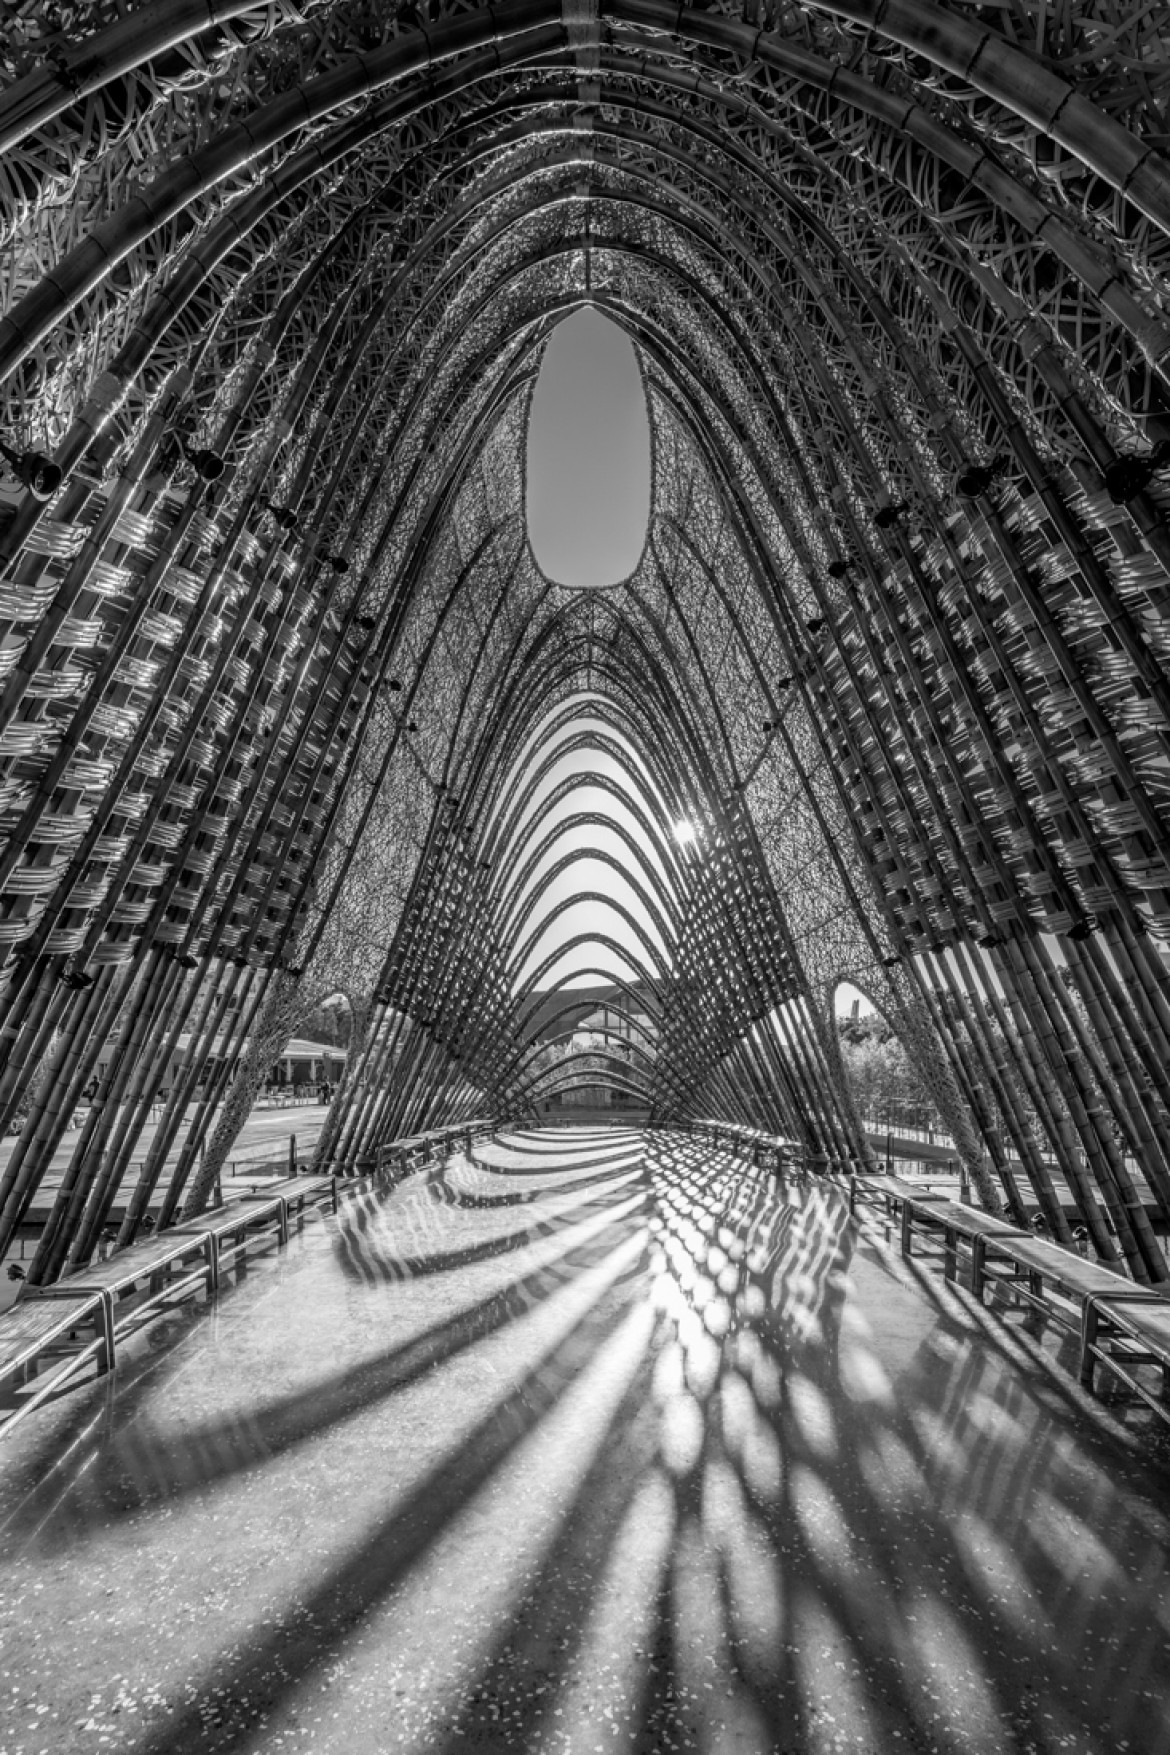 fot. Shih-Hung Yang, "Bamboo Pavilion", 3. nagroda w kategorii Architecture / Monovisions Photography Awards 2019